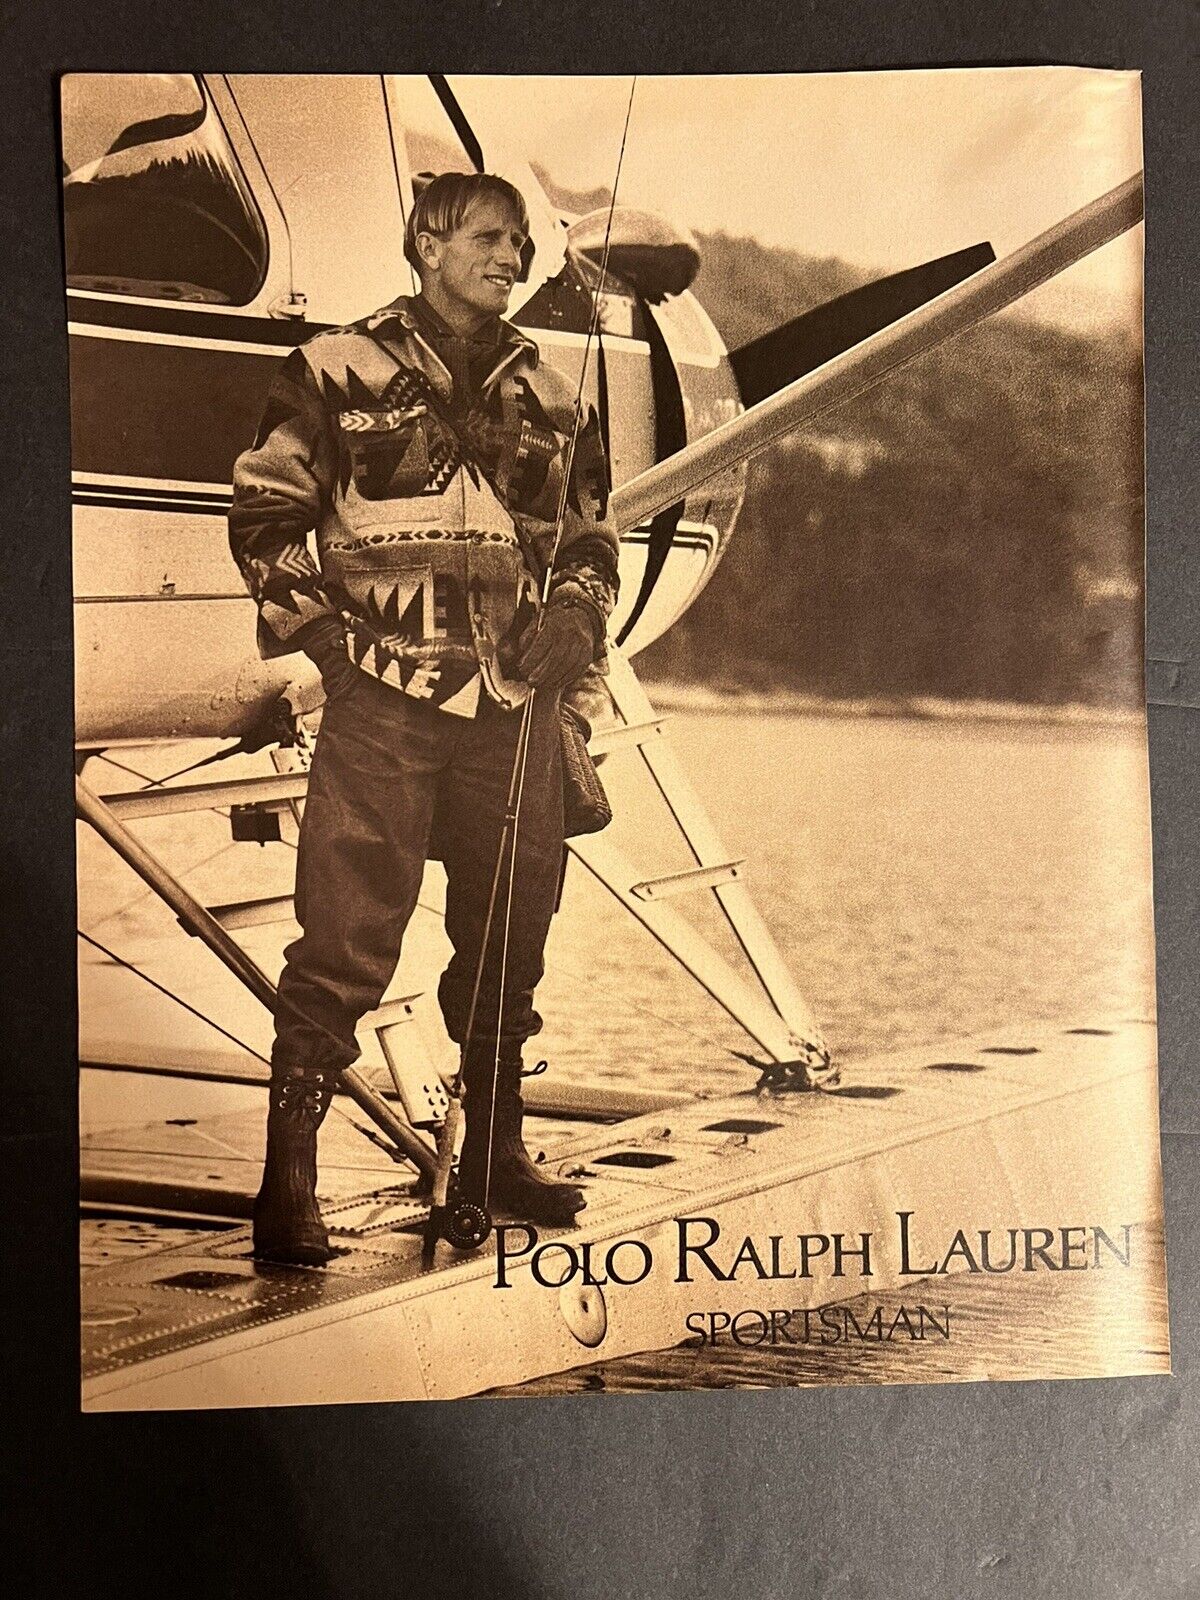 Vtg 1990s Polo Ralph Lauren Sportsman Ad, Aviator Theme